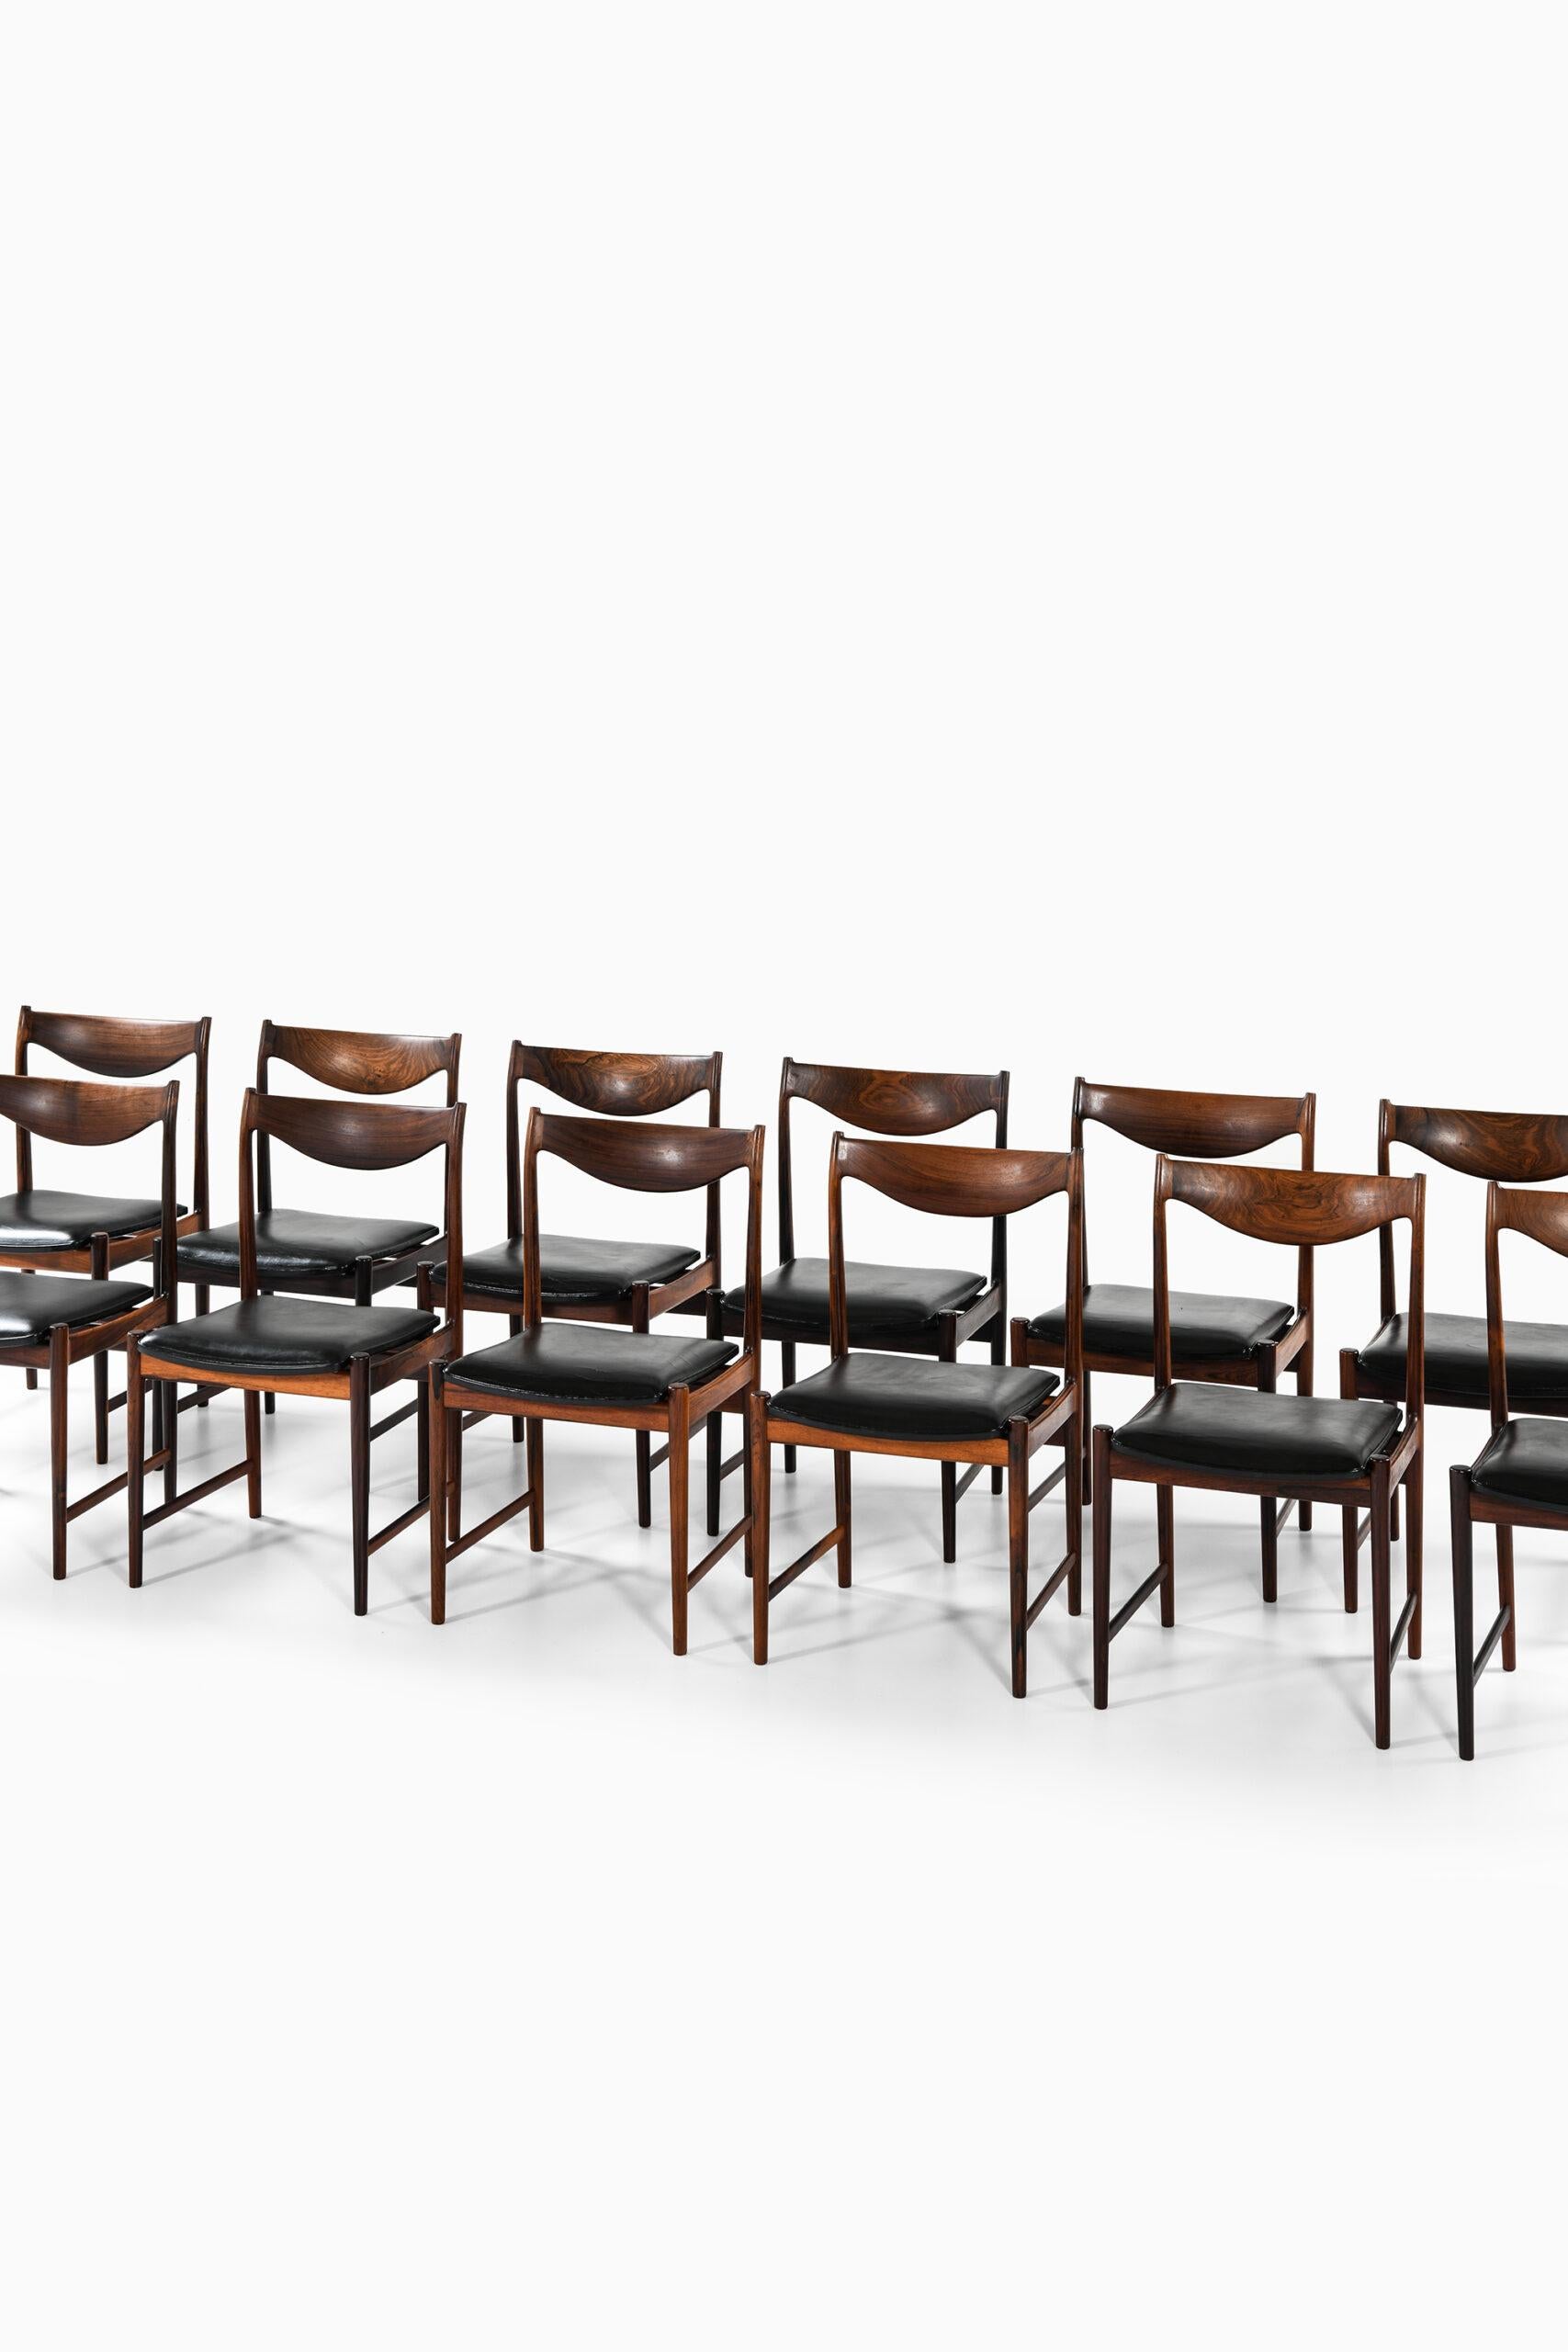 Very rare set of 12 dining chairs model Darby designed by Torbjørn Afdal. Produced by Nesjestranda Møbelfabrik in Norway.